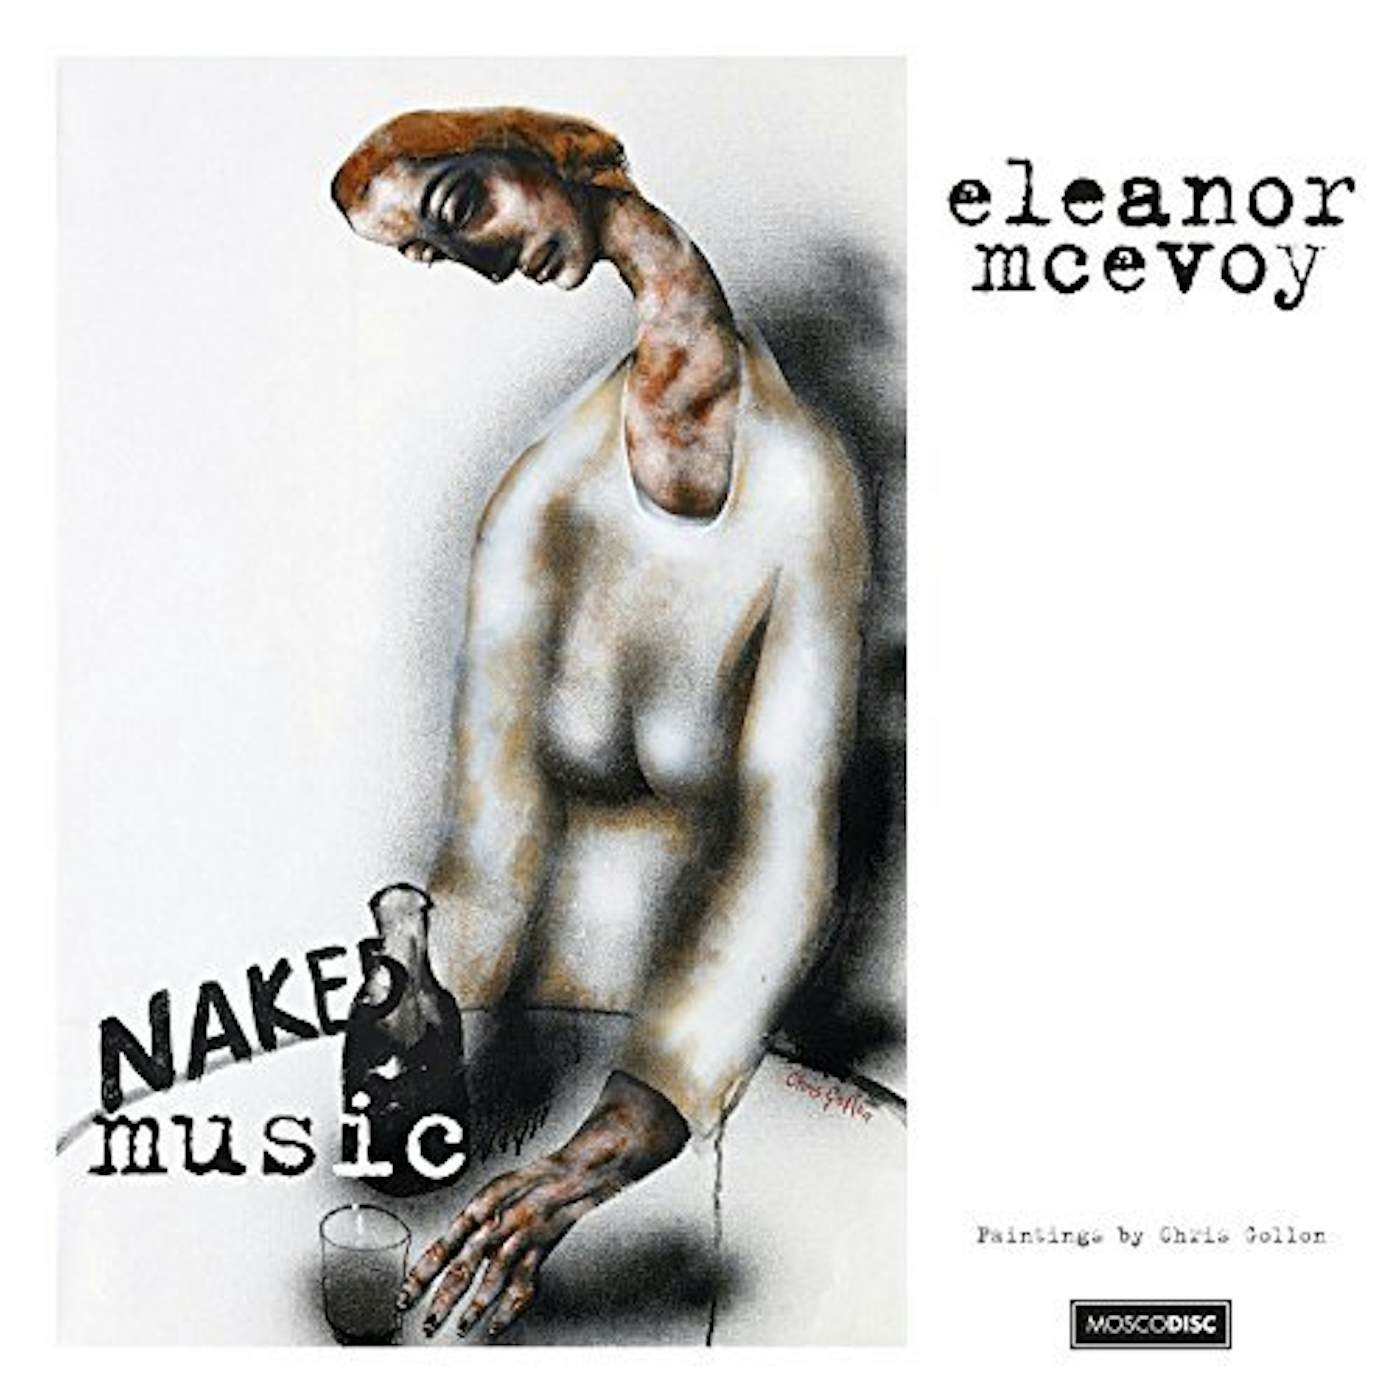 Eleanor McEvoy Naked Music Vinyl Record